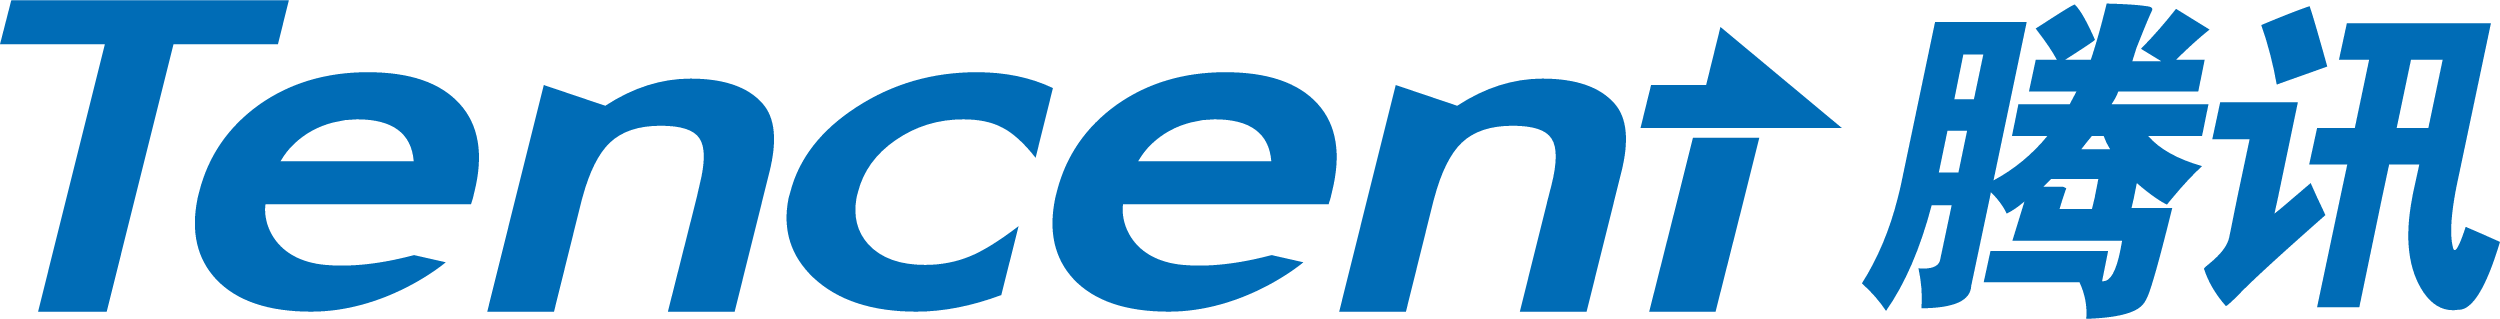 Tencent Logo Logos